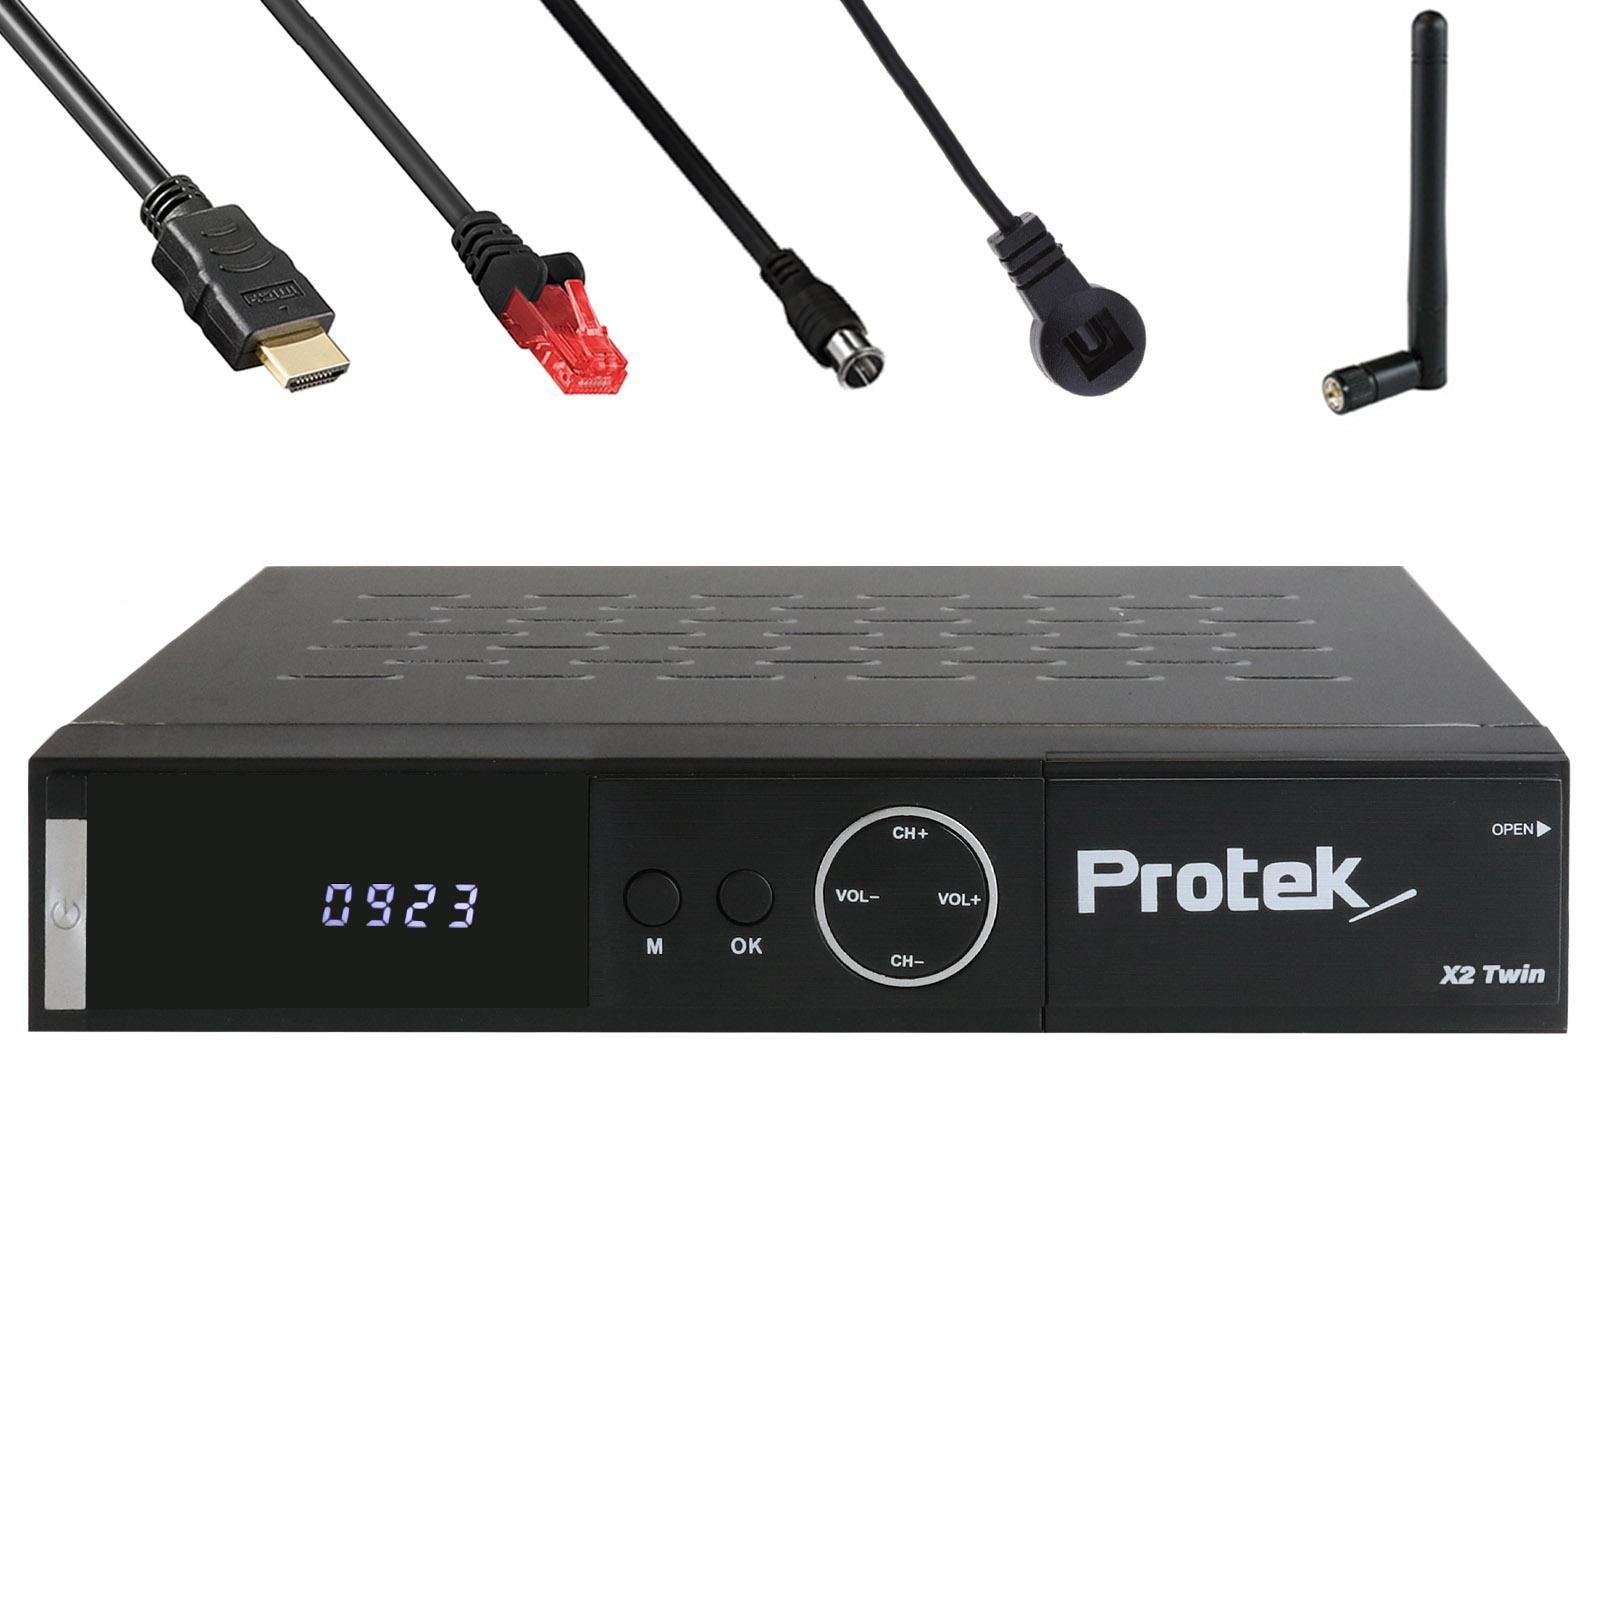 HDMI Kabel HDTV WiFi Infrarot Empfänger HDR H.265 2160p USB 2.0 & 3.0 HMP 8 GB USB-Stick 1x DVB-C/T2 Tuner 1x DVB-S2 E2 Linux Protek X2 4K UHD Combo Receiver 